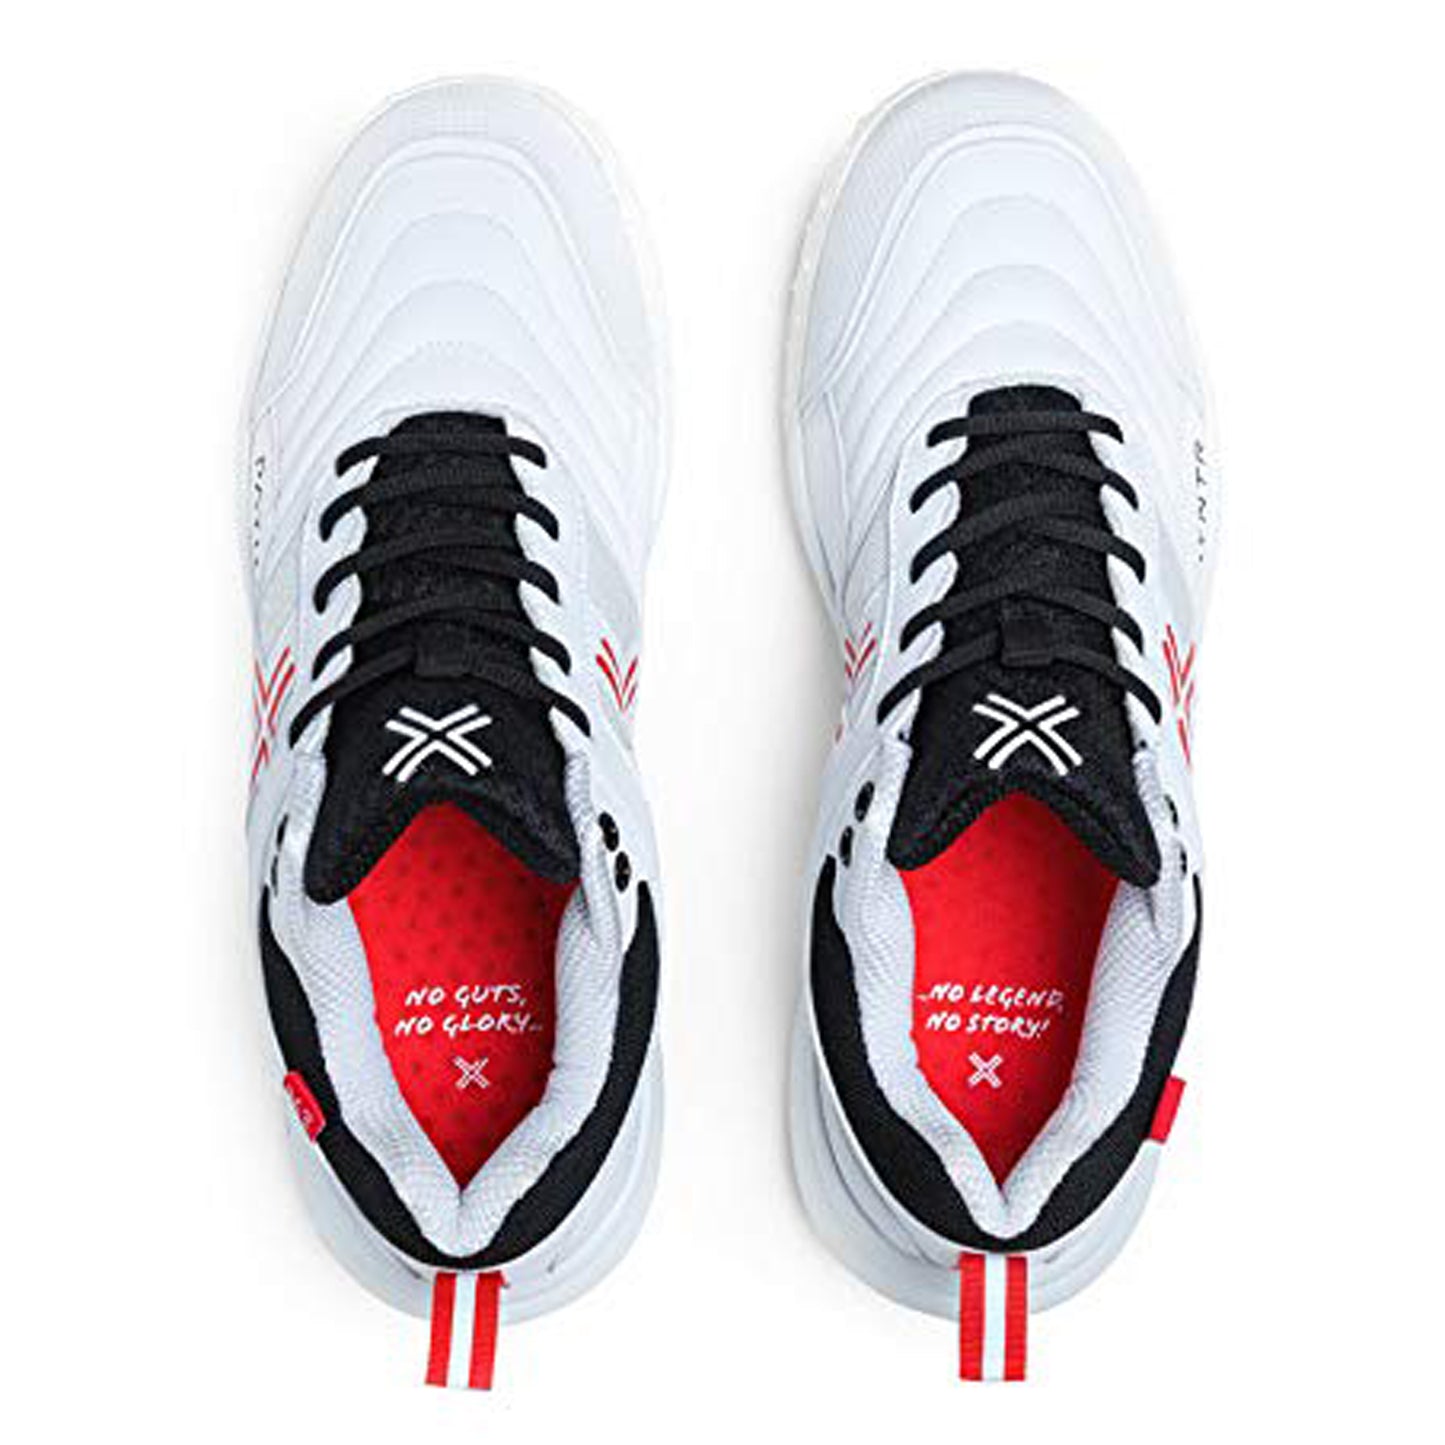 Payntr 263 Bodyline All Rounder Cricket Shoes, White - Best Price online Prokicksports.com